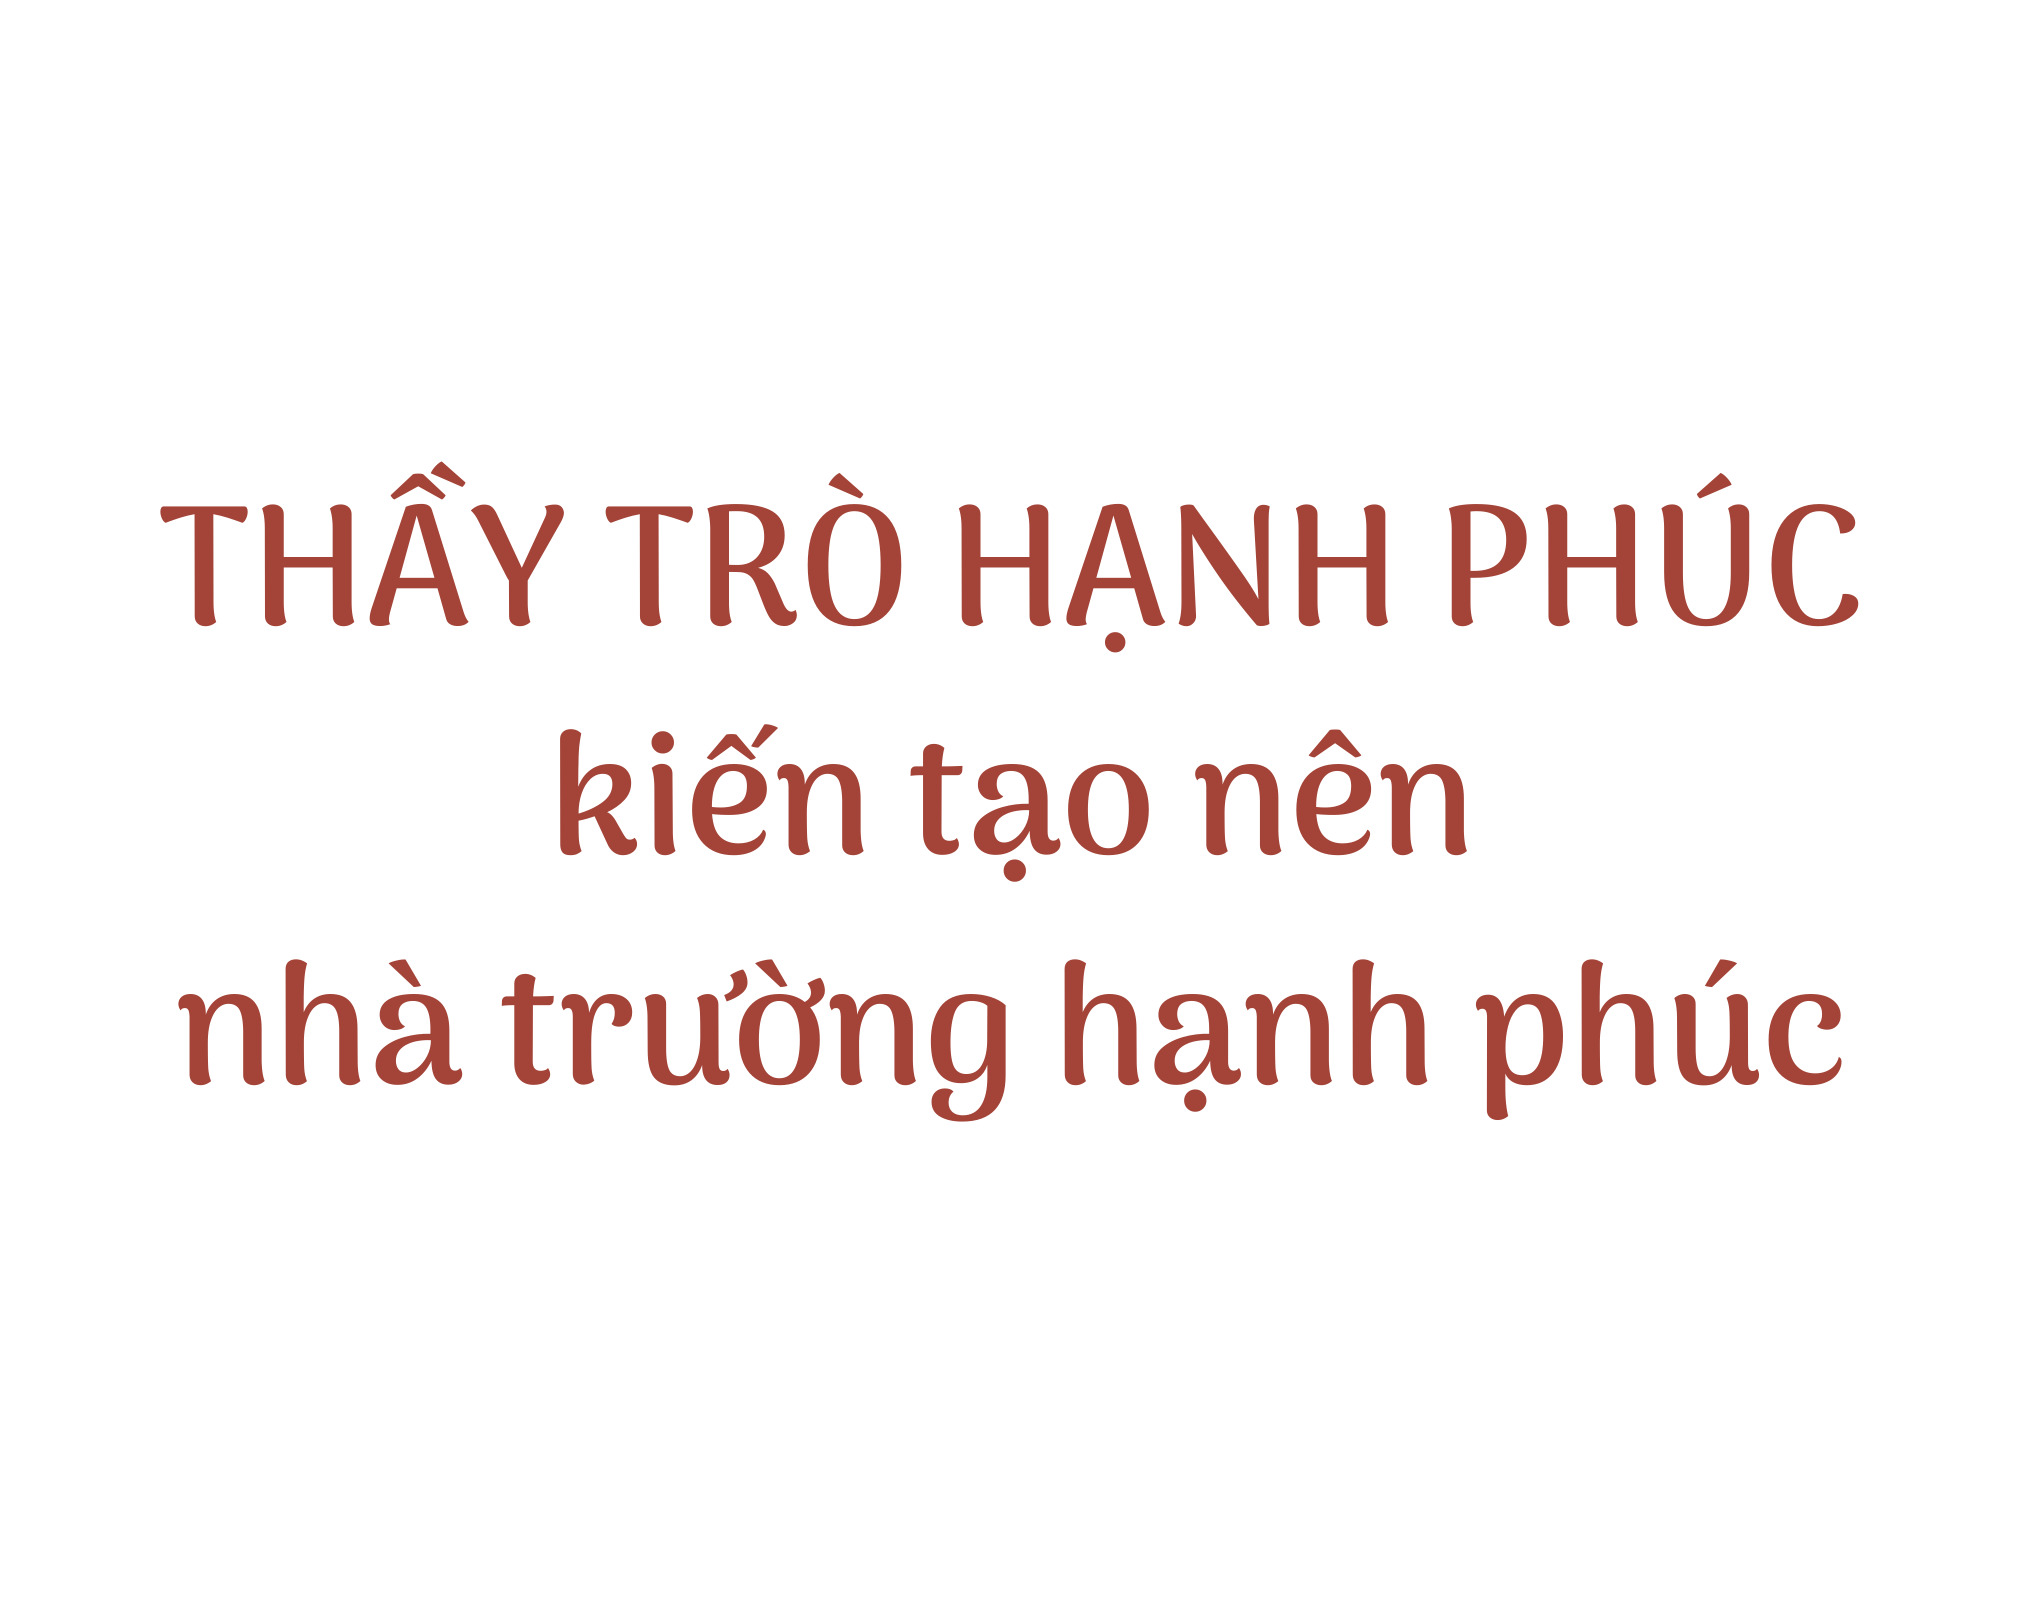 Copy of truong hoc hanh phuc ha noi (4)